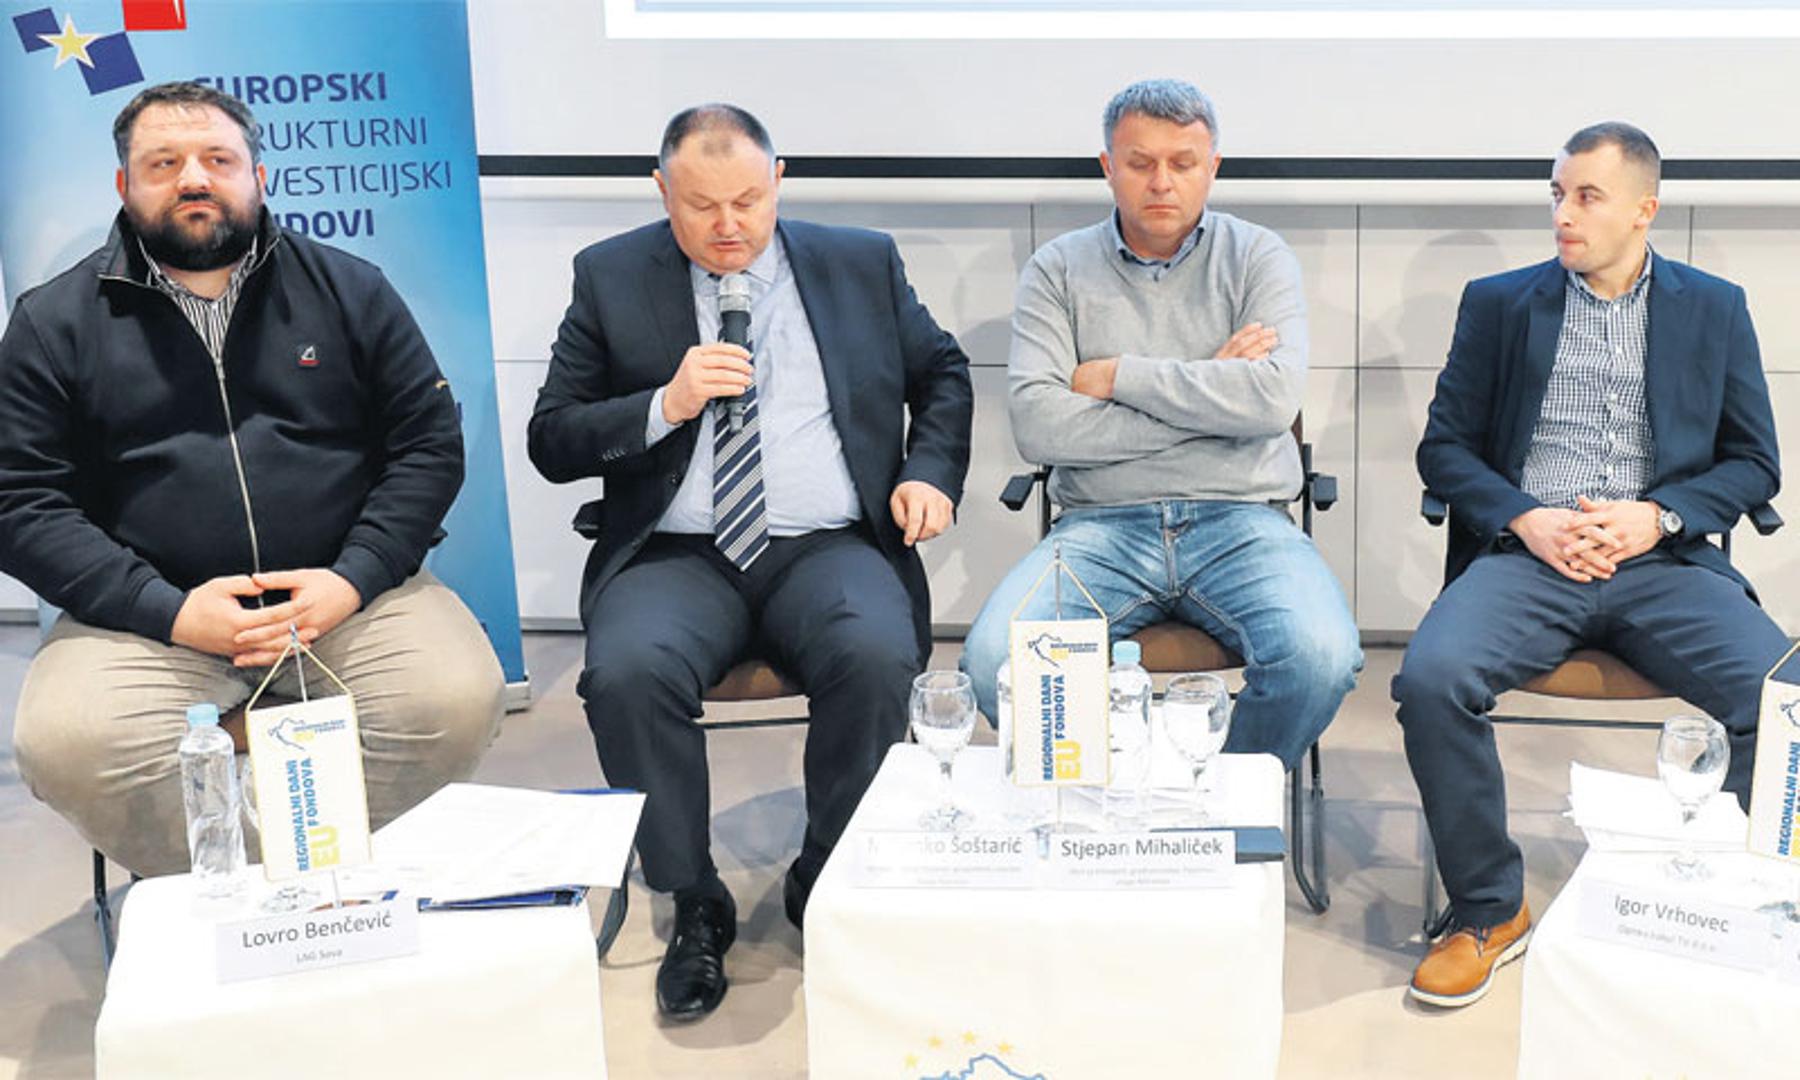 Lovro Benčević, Miljenko Šoštarić, Stjepan Mihaliček i Ivan Vrhovec na panel diskusiji o razvoju grada putem europskih fondova